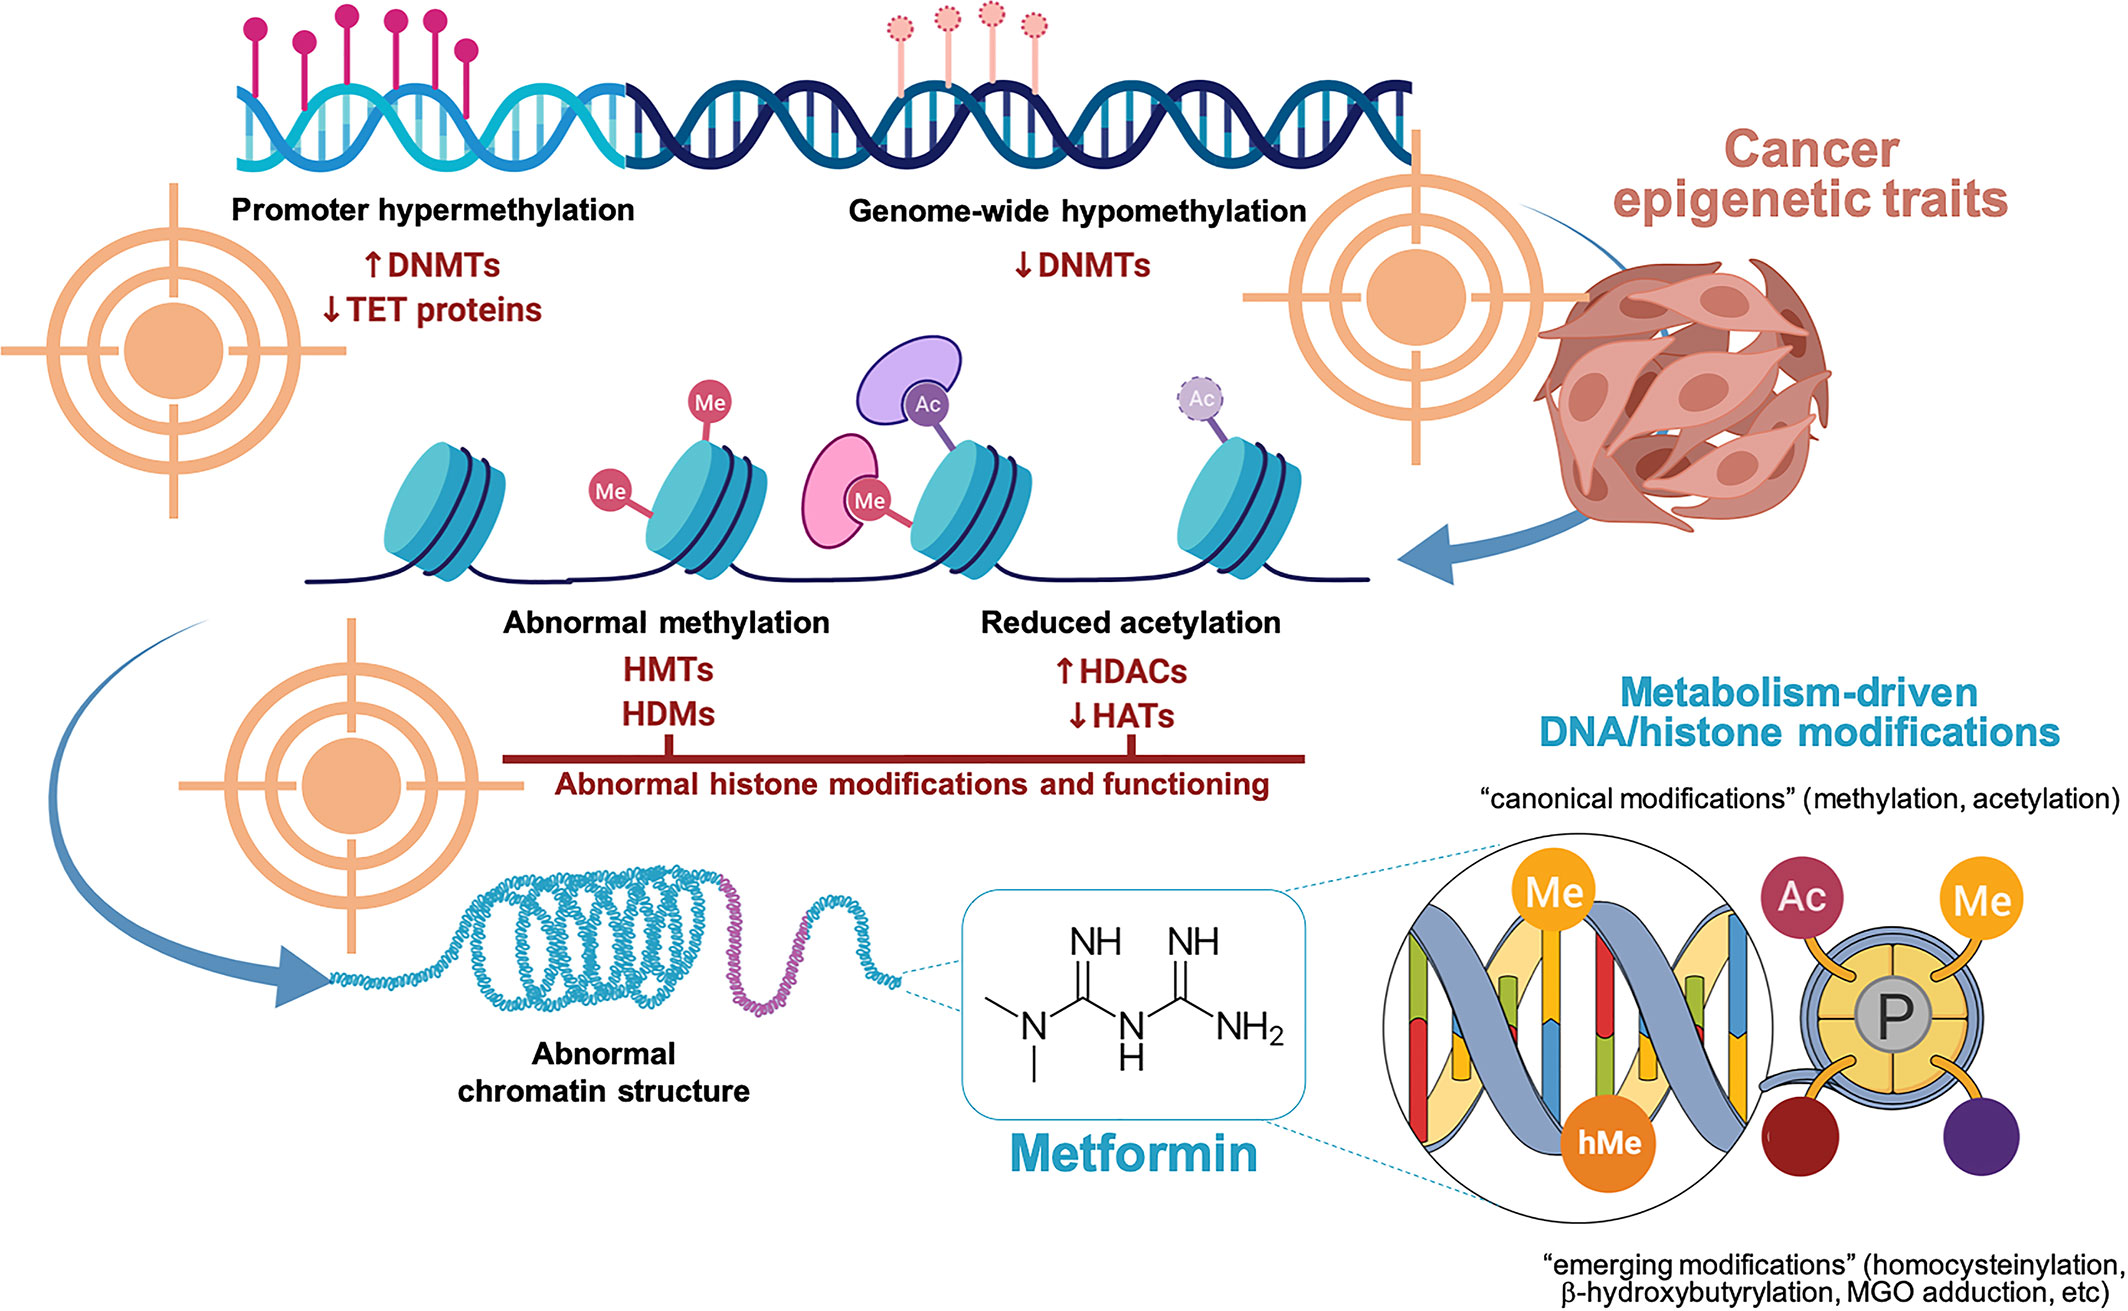 Frontiers Metformin Targeting The Metabolo Epigenetic Link In Cancer